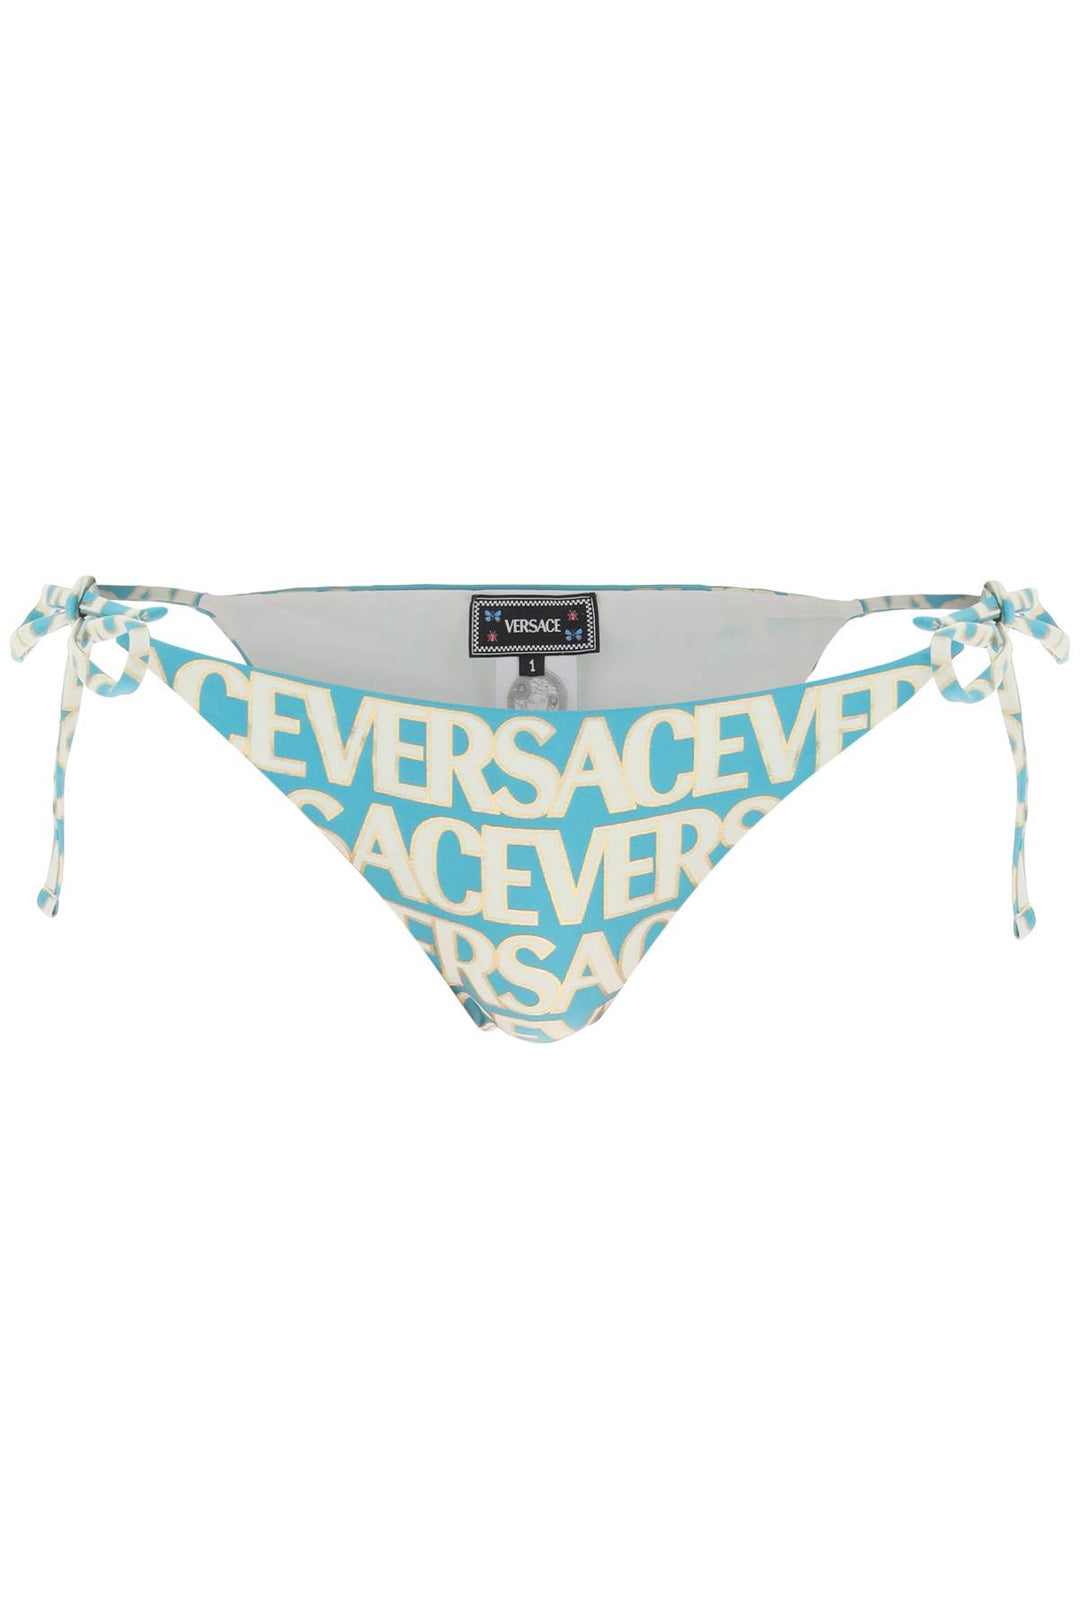 Versace versace allover bikini bottom-0